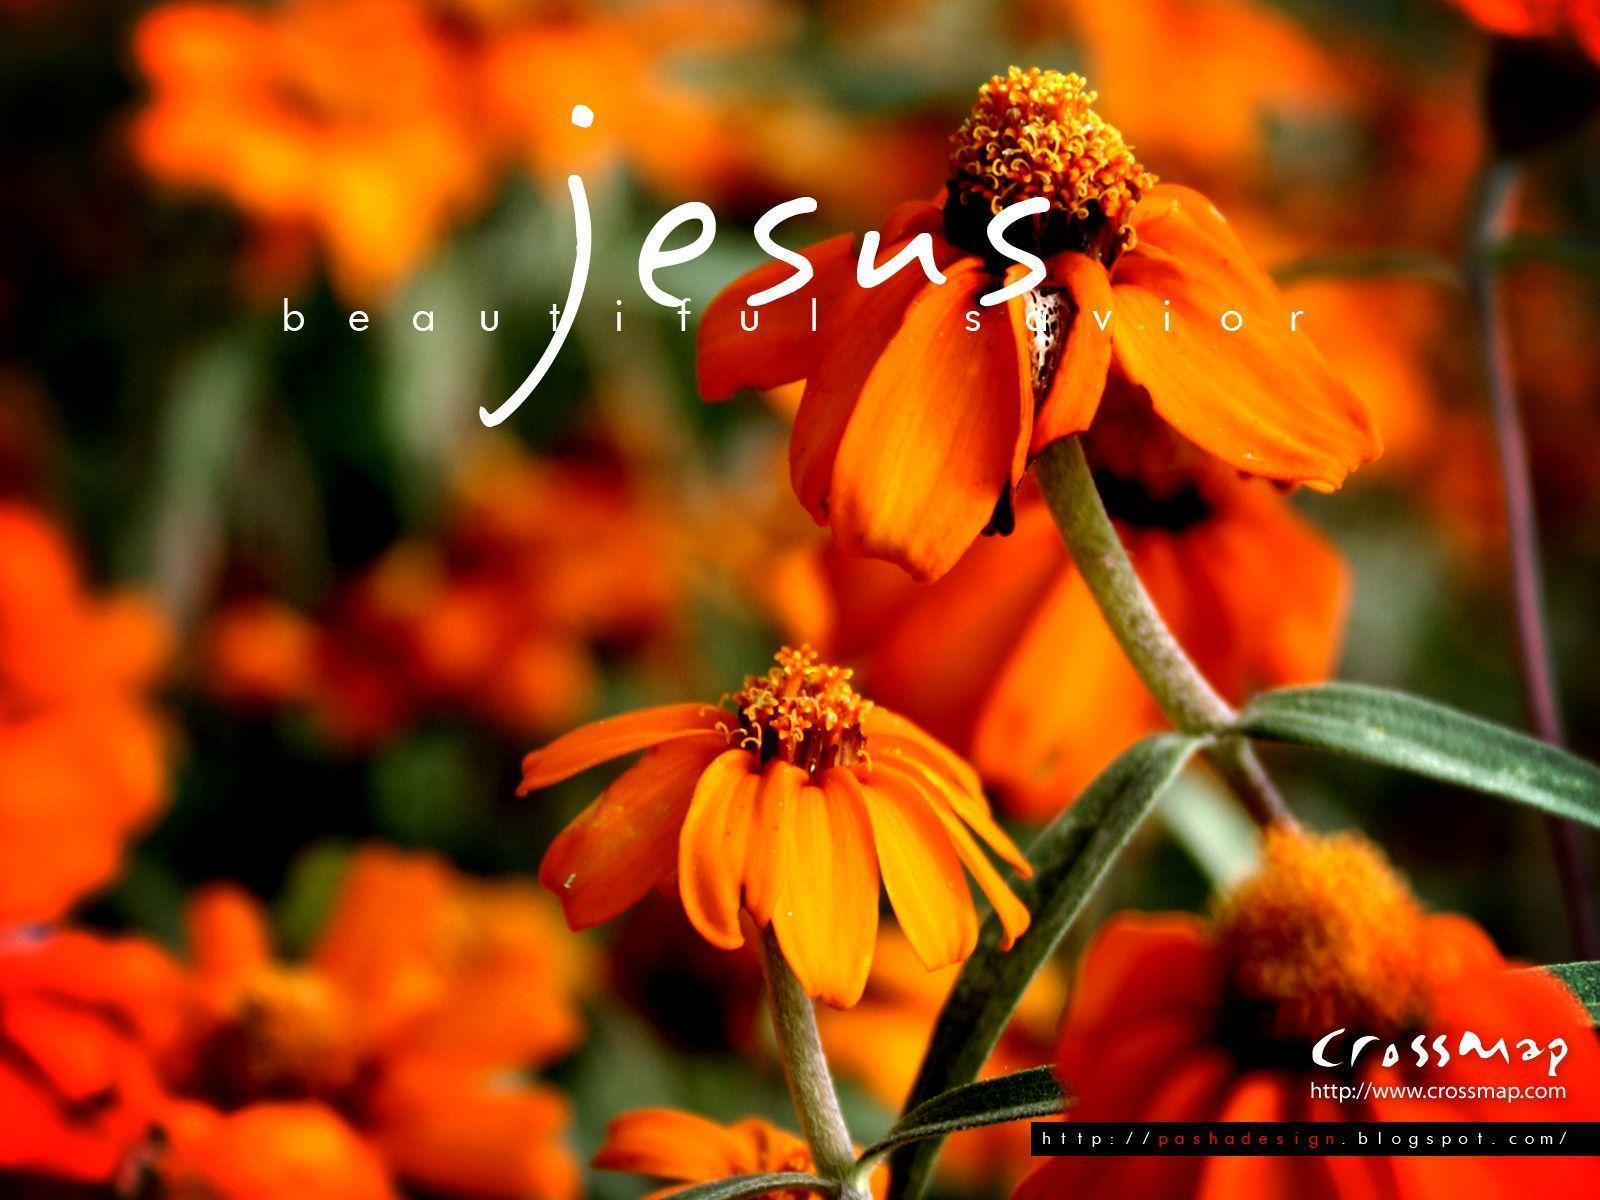 Jesus Beautiful Savior 3. Christian Photographs. Crossmap